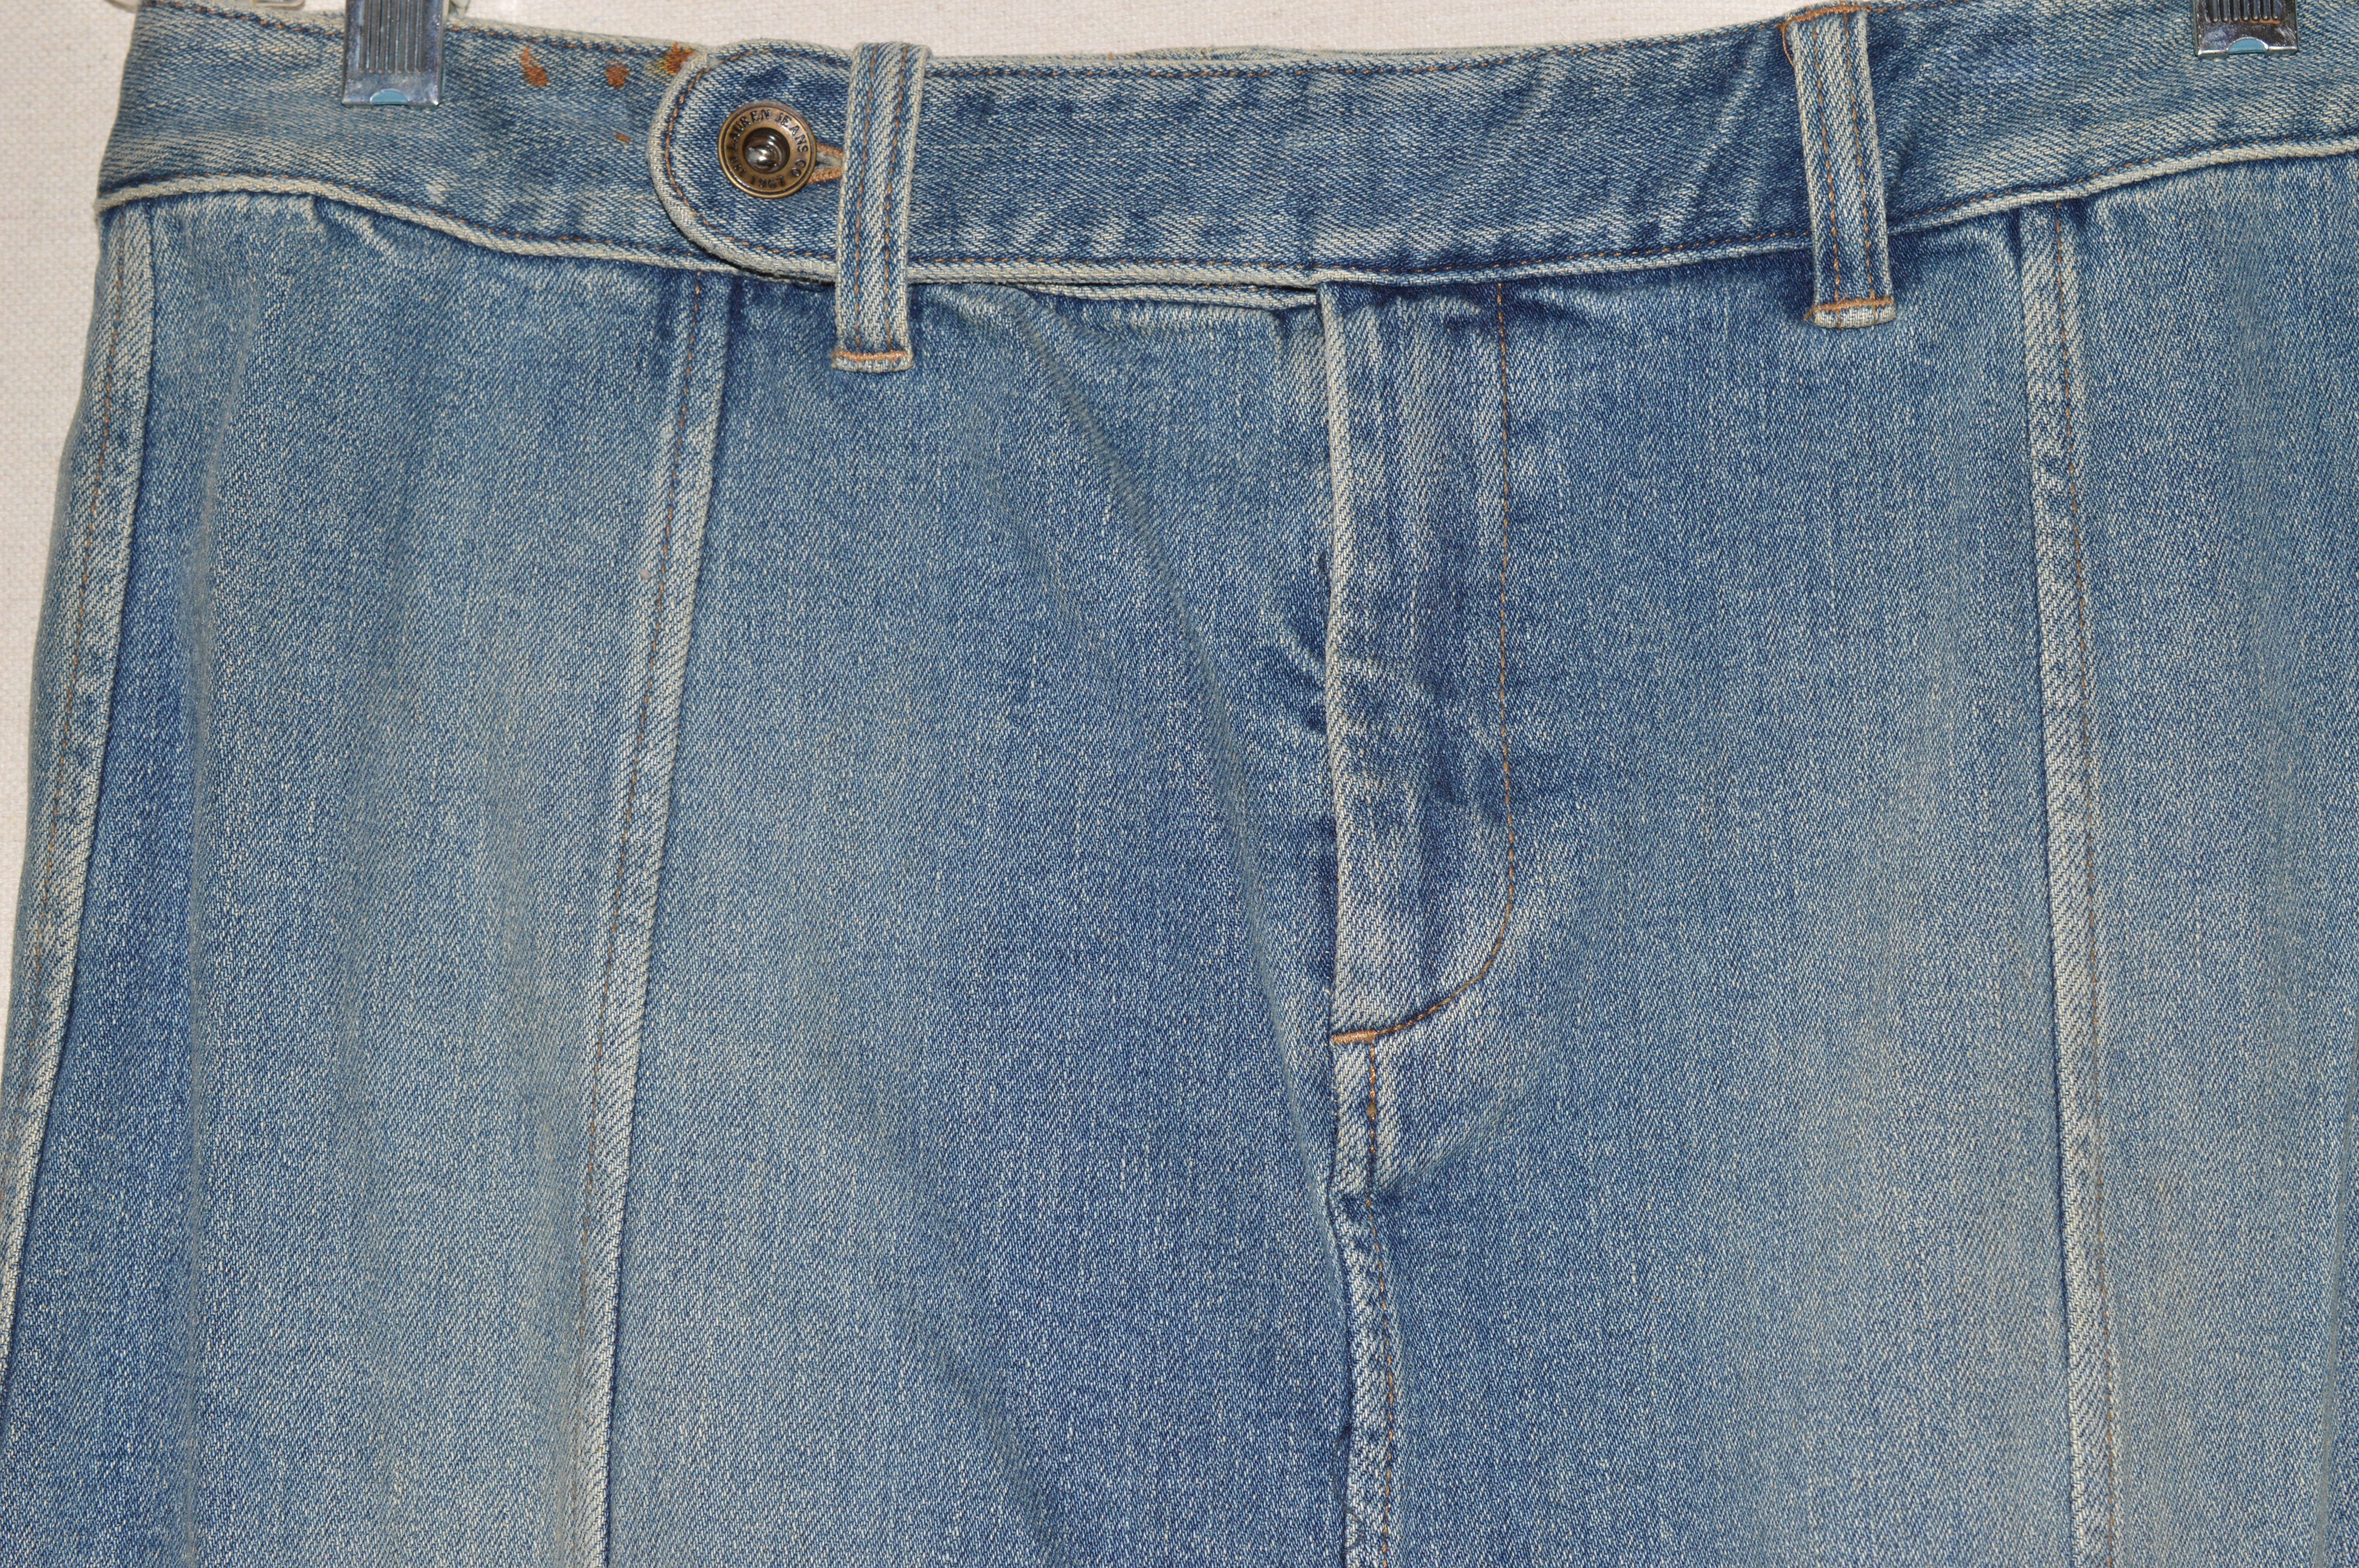 Lauren Jeans Co. Premium Denim Skirt 